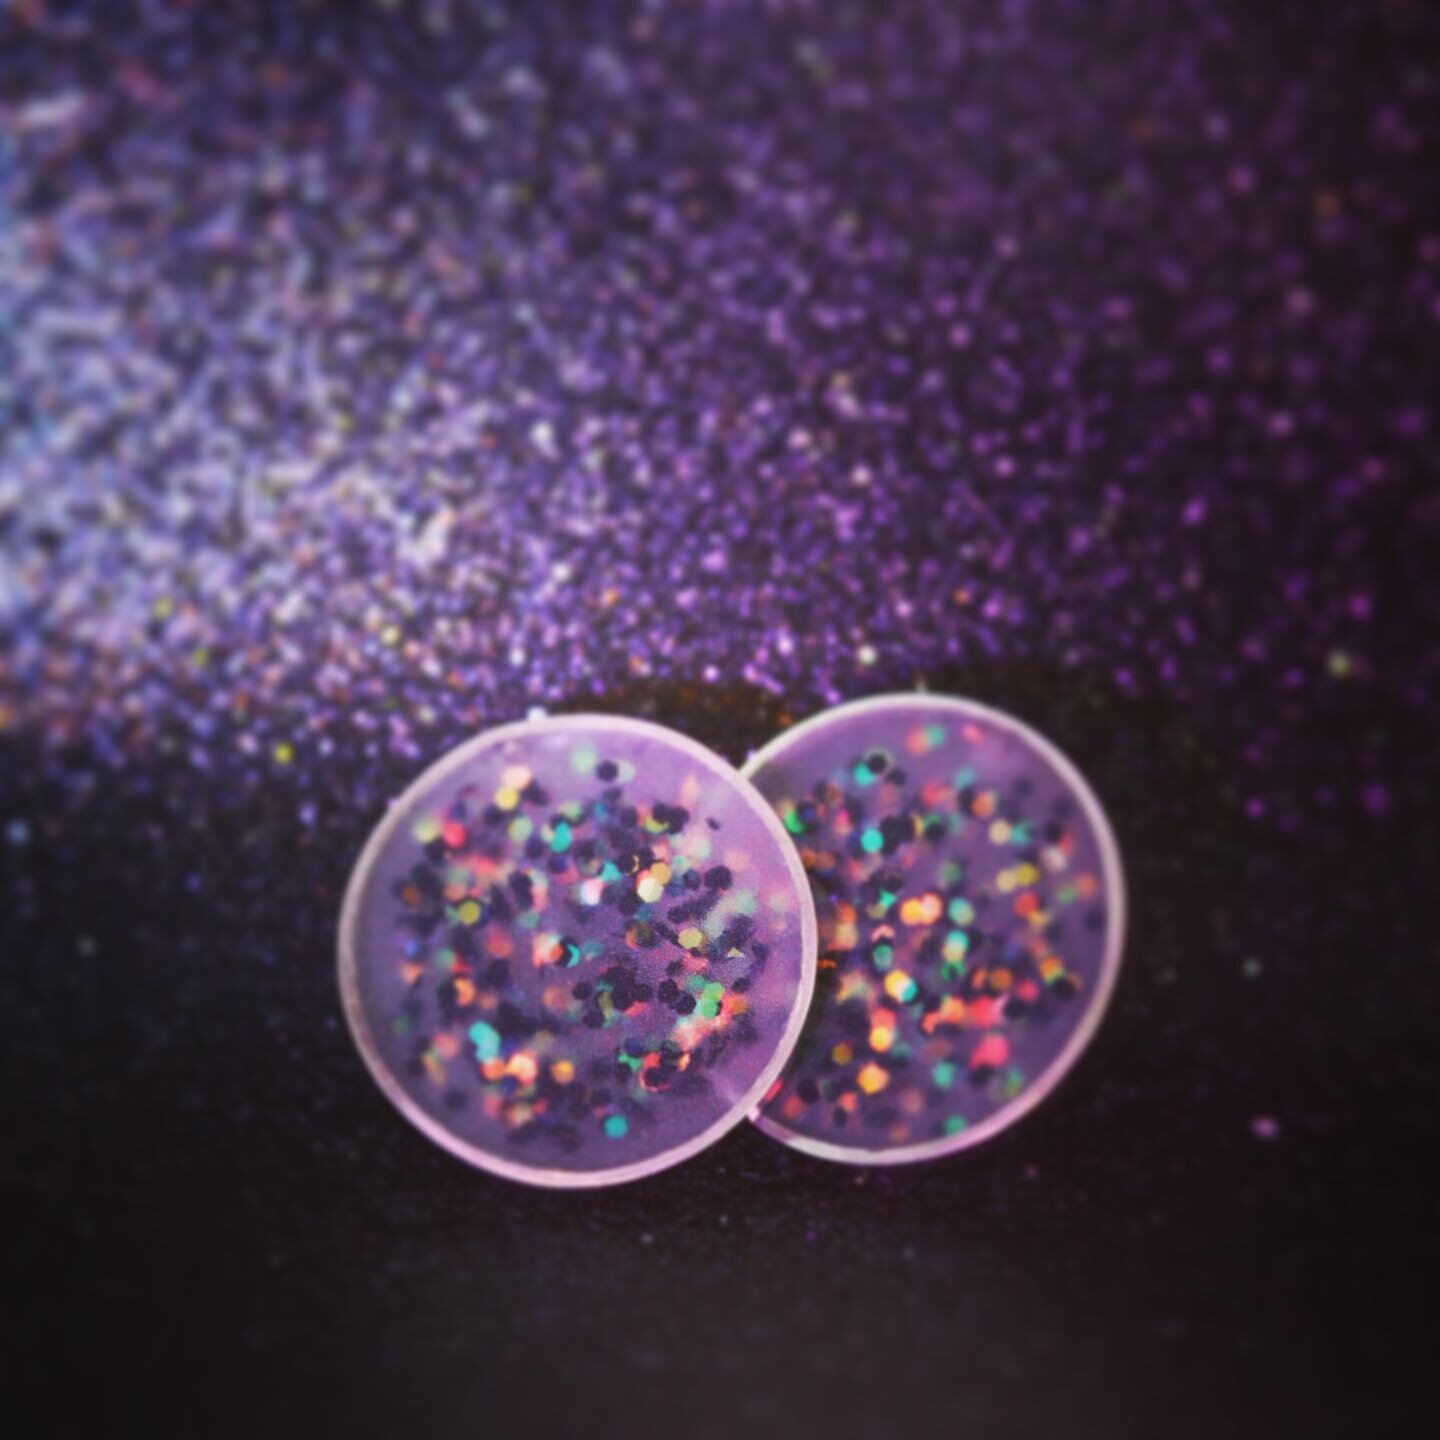 Bubbles in the Galaxy .
.
.

#berlin #photooftheday #karlskragen #schmuckdesign #musthave #unikate #handmade #instajewelry #beauty #styl #model #design #colorful #follower #instapic #instamood #galaxy #bubble #glitter #sparkle #milkyway